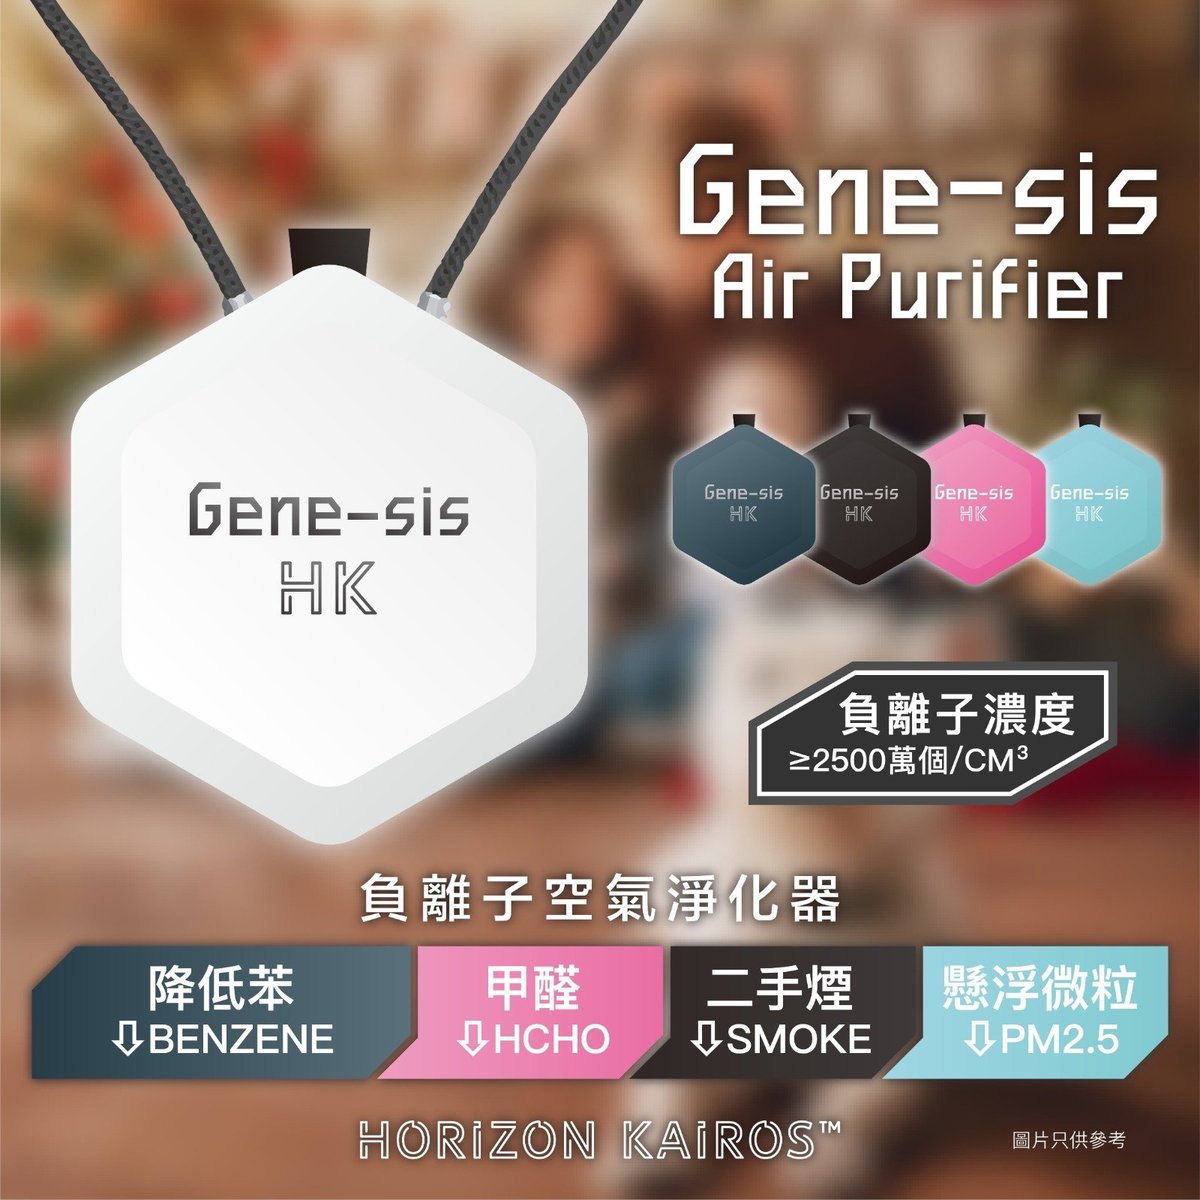 Gene-sis - HK negative ion air purifier [Hong Kong licensed]